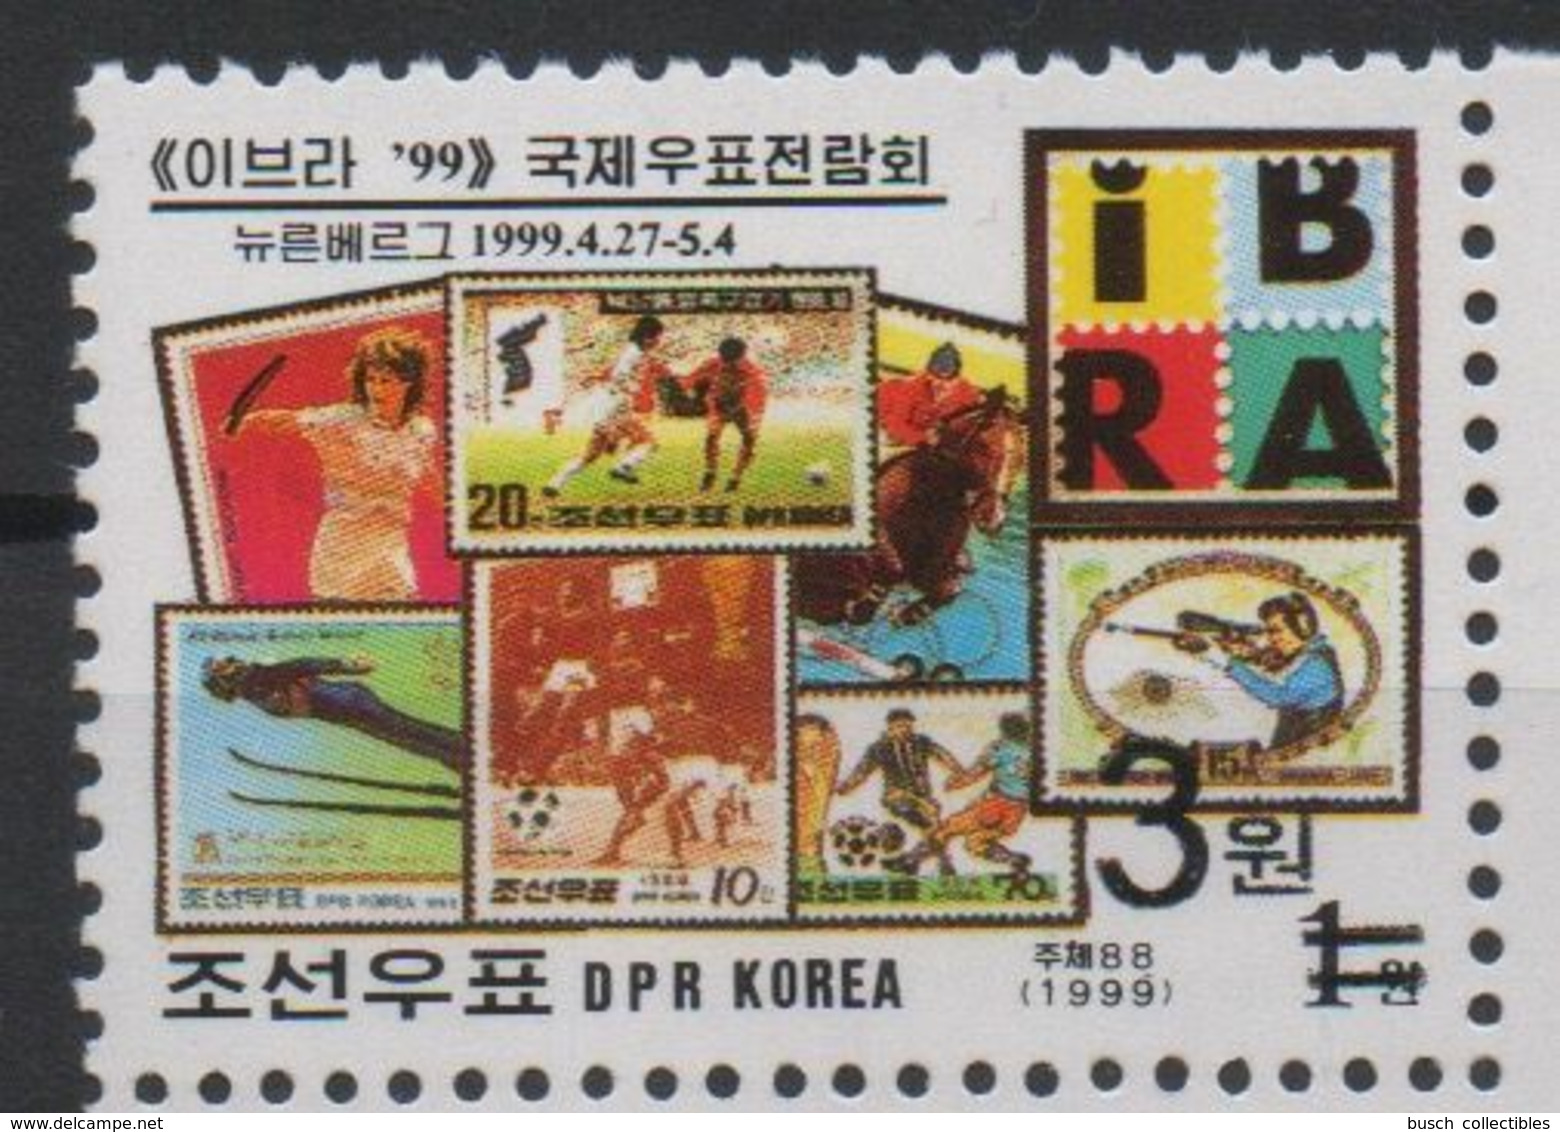 North Korea Corée Du Nord 2006 Mi. 5068 Surchargé OVERPRINT IBRA Nürnberg 1999 Stamp On Stamp Timbre Sur Timbre - Postzegels Op Postzegels